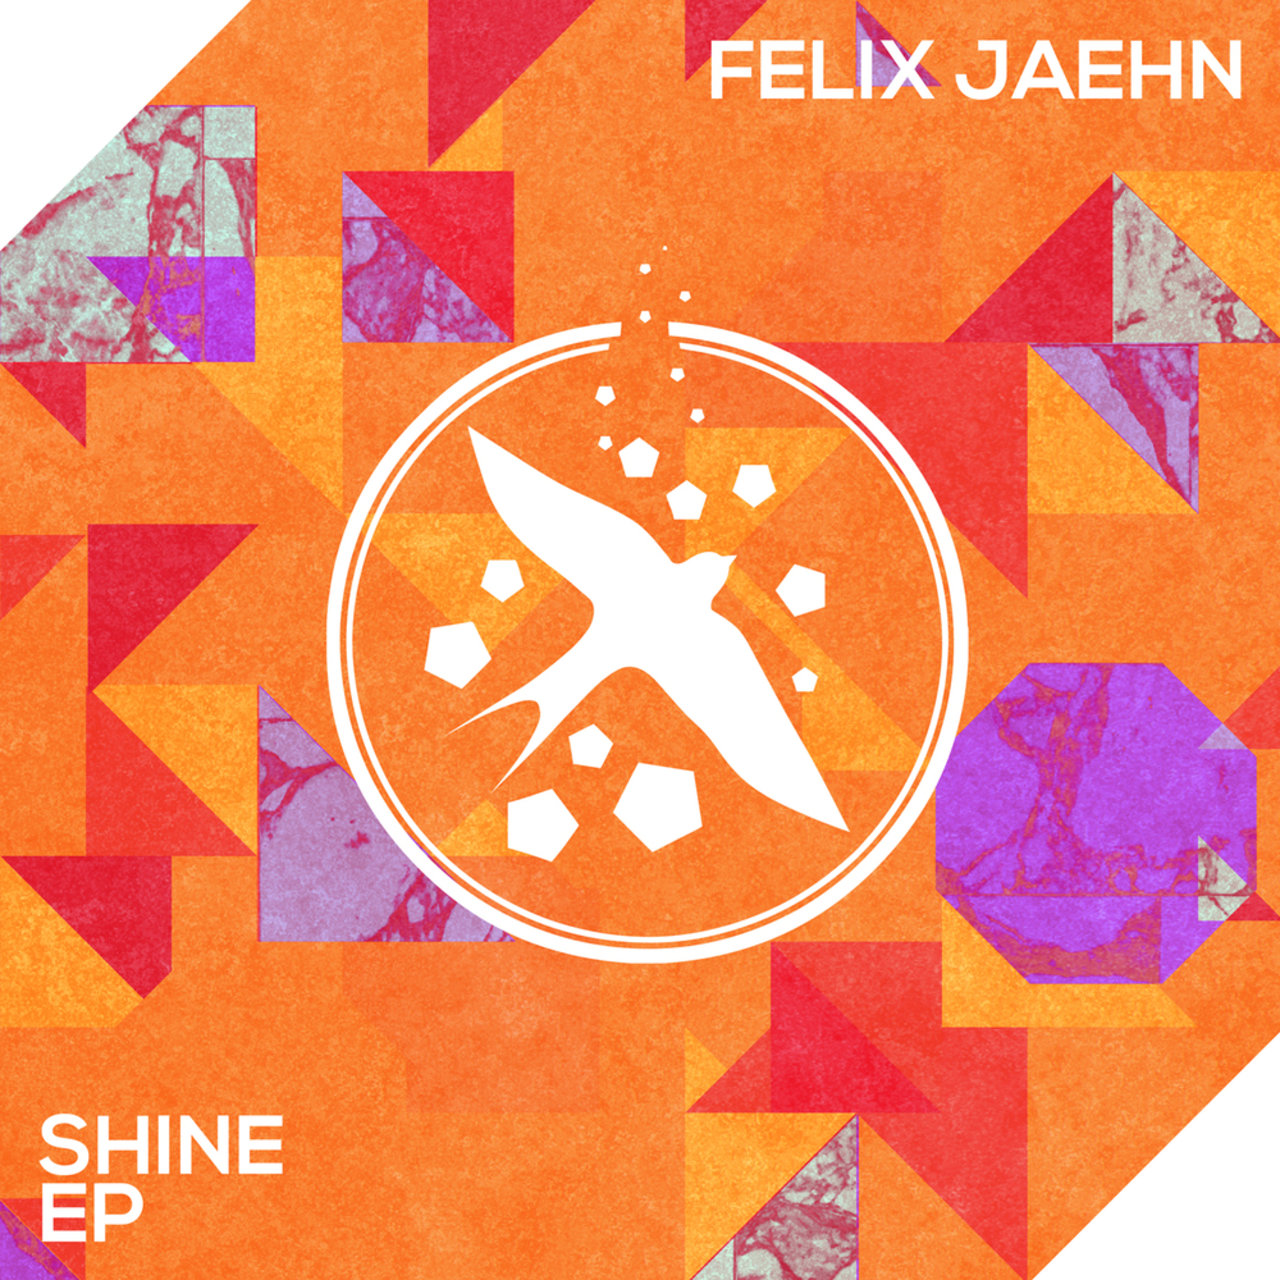 Felix Jaehn Shine (EP) cover artwork